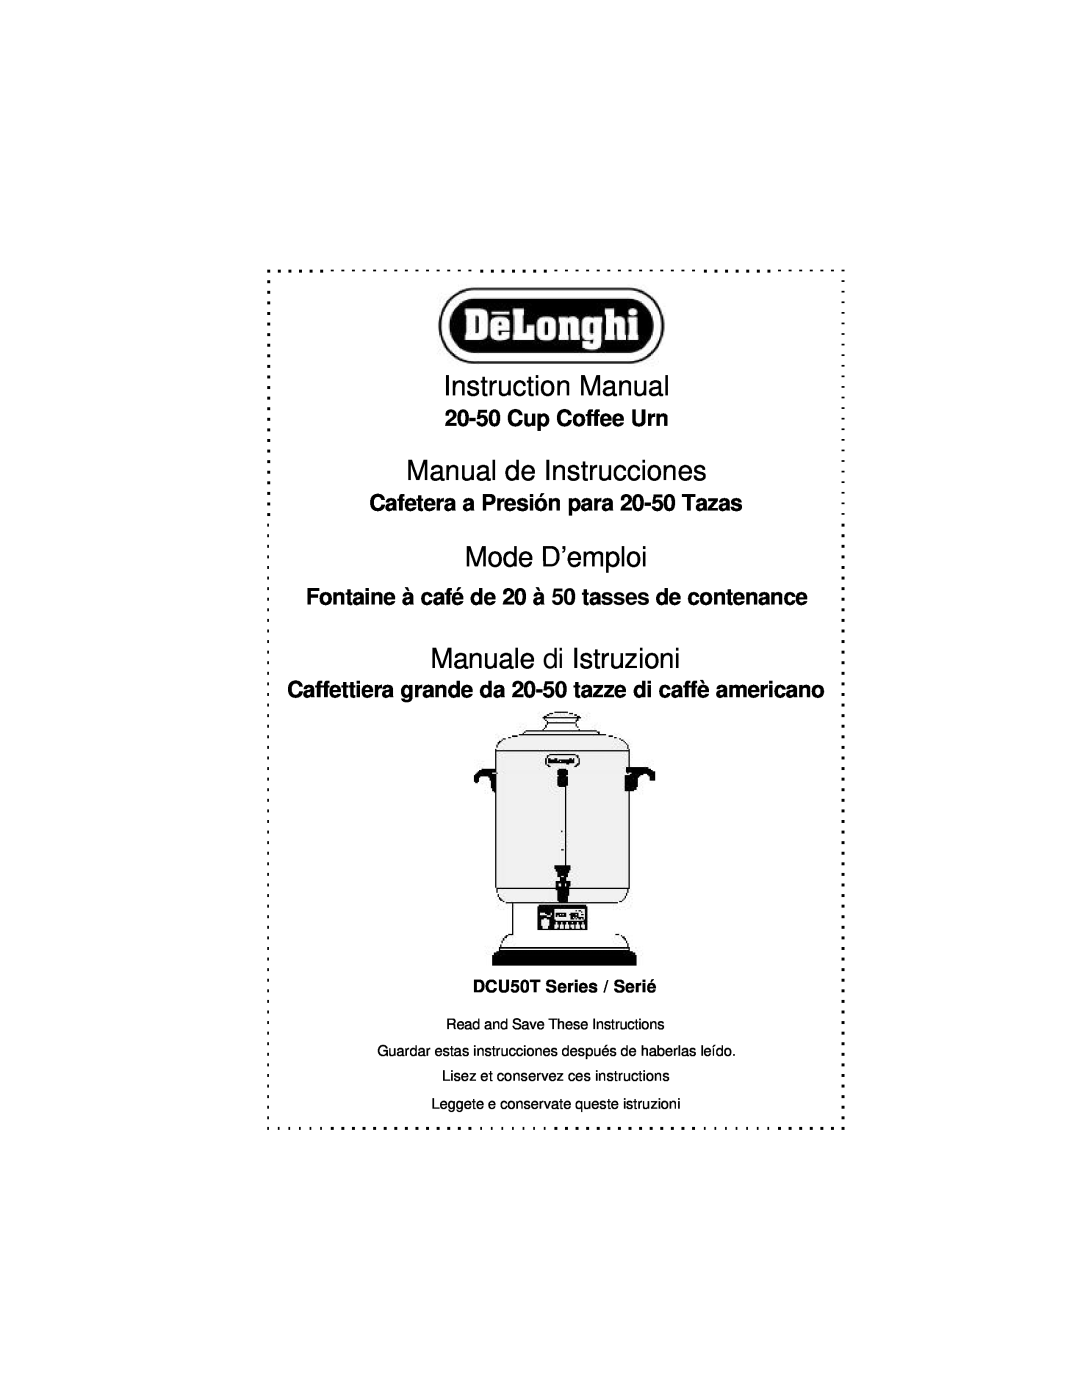 DeLonghi DCU50T Series instruction manual Manual de Instrucciones, Mode D’emploi, Manuale di Istruzioni, Cup Coffee Urn 